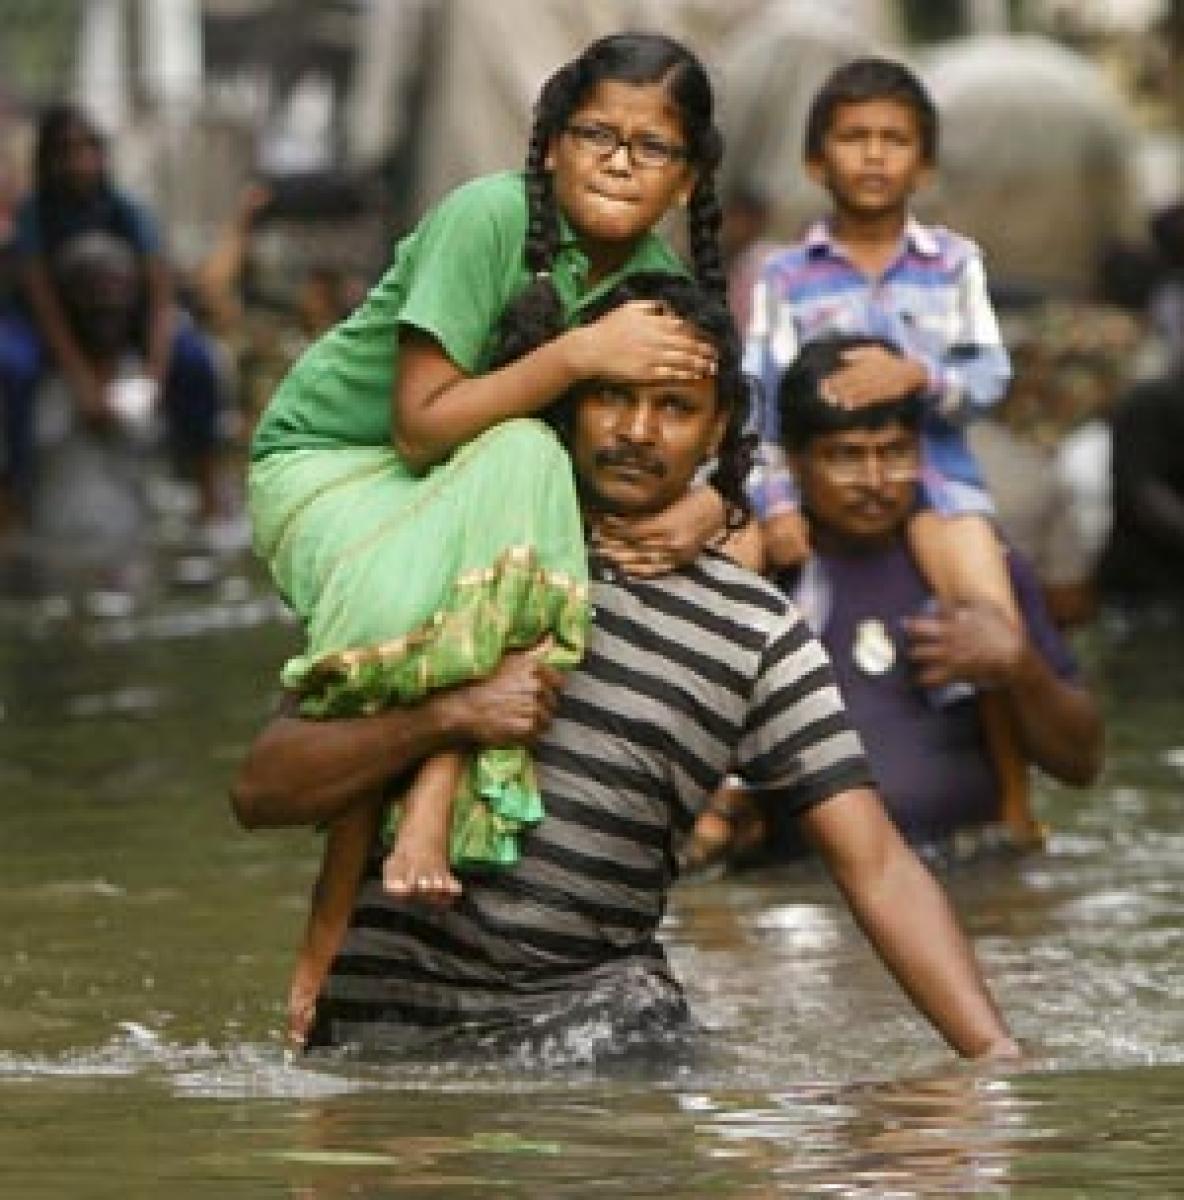 None cares for school children during rainy season